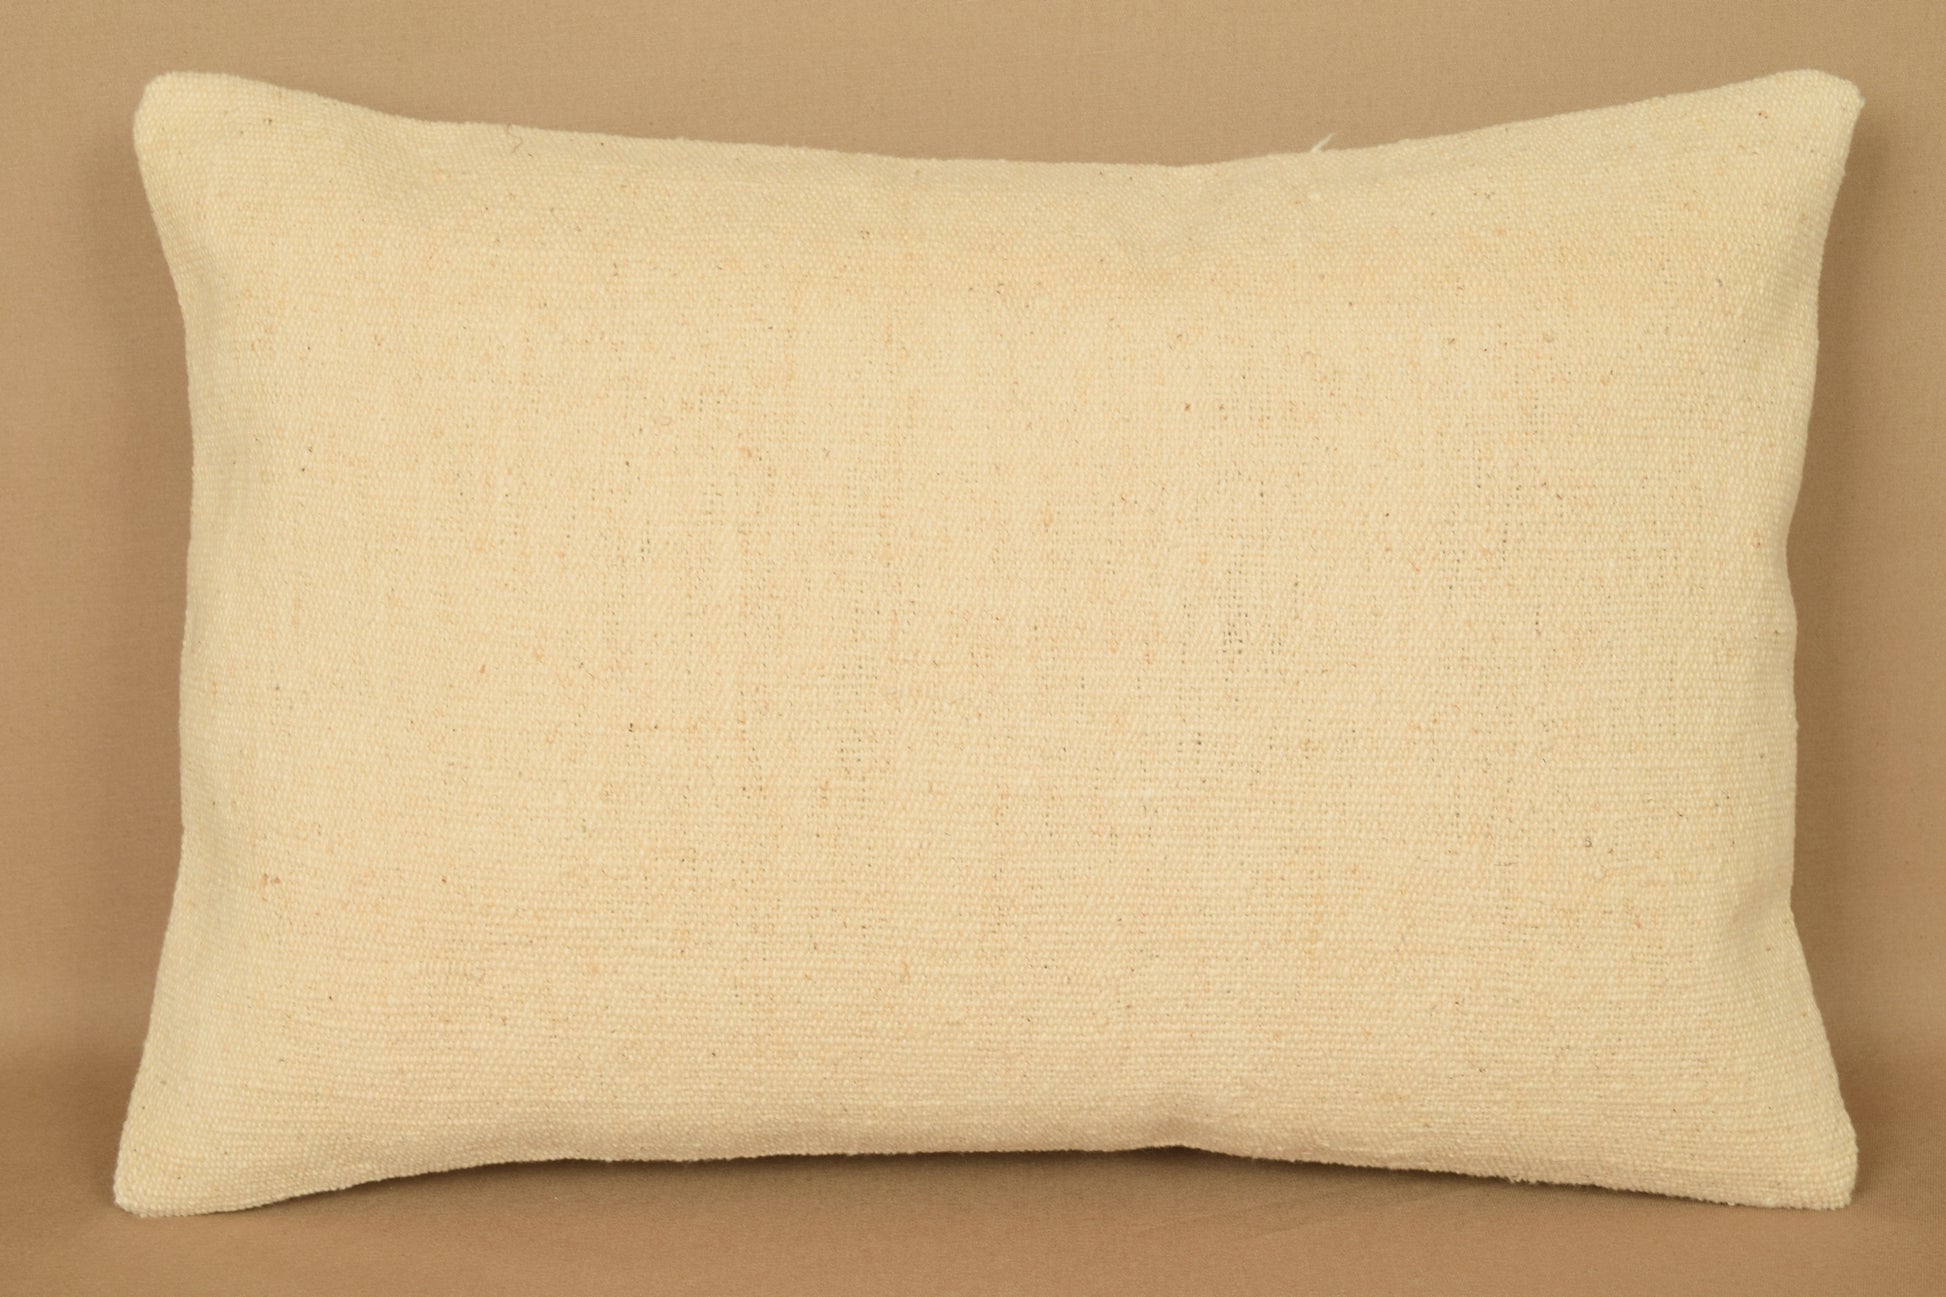 Turkish Cushions Ebay 16x24 " 40x60 cm. E00718 Kilim Cushion Covers Large